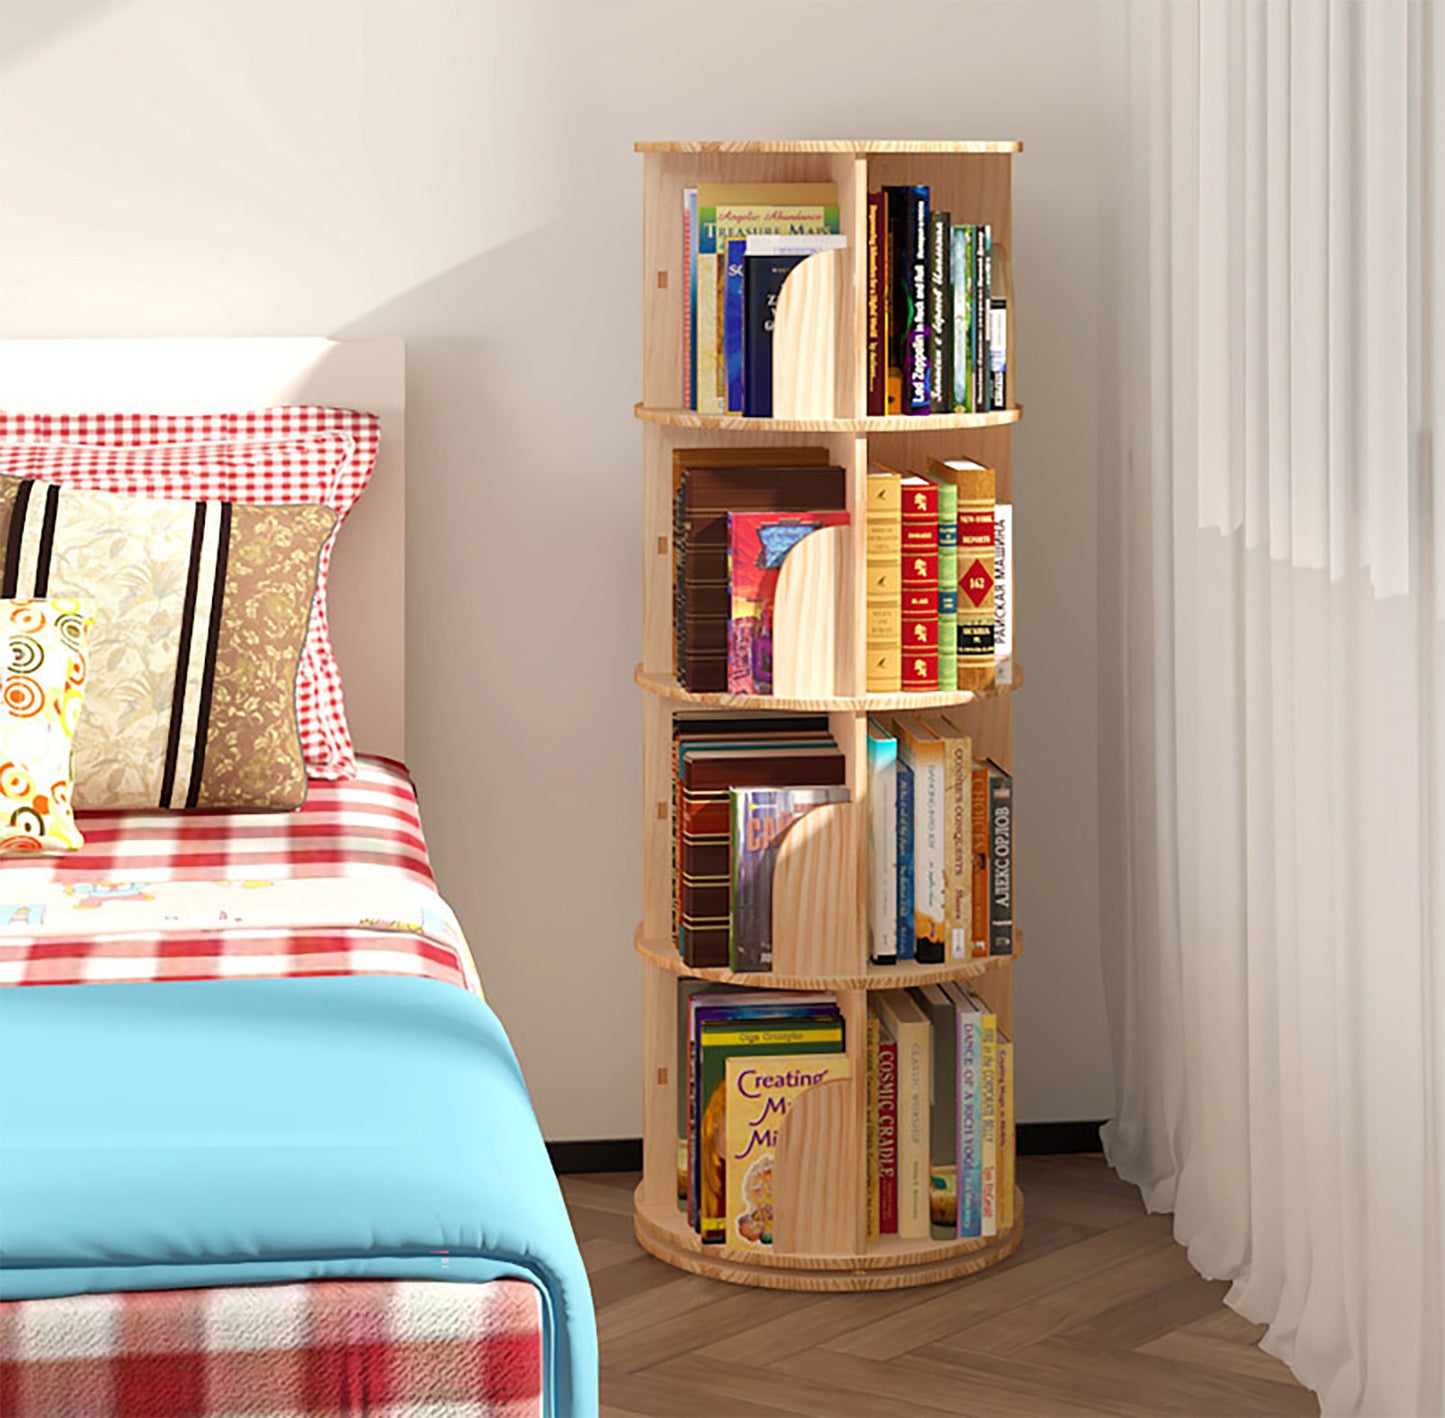  Wood Rotating Book Shelf, Floor Rotating Bookshelf